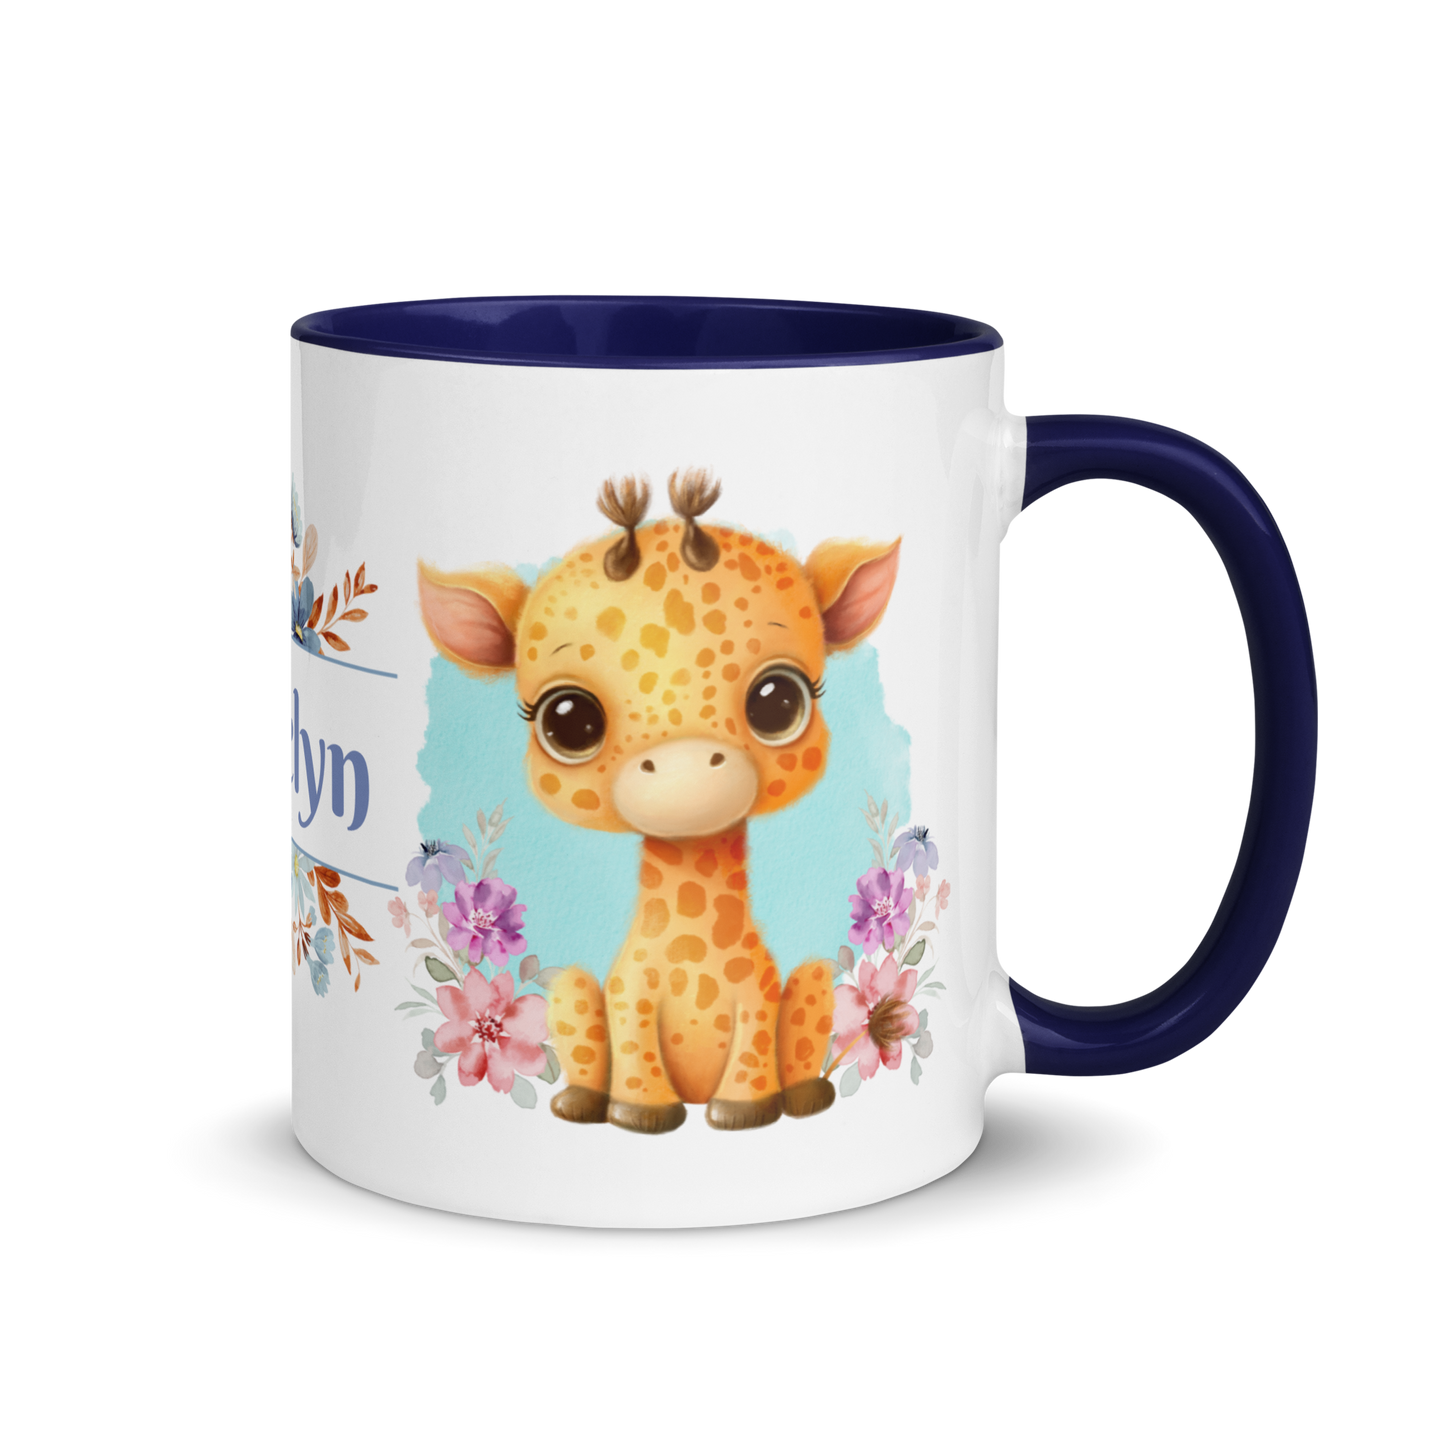 Add Your Name Coffee Mug 11oz | Cute Giraffe Floral Themed